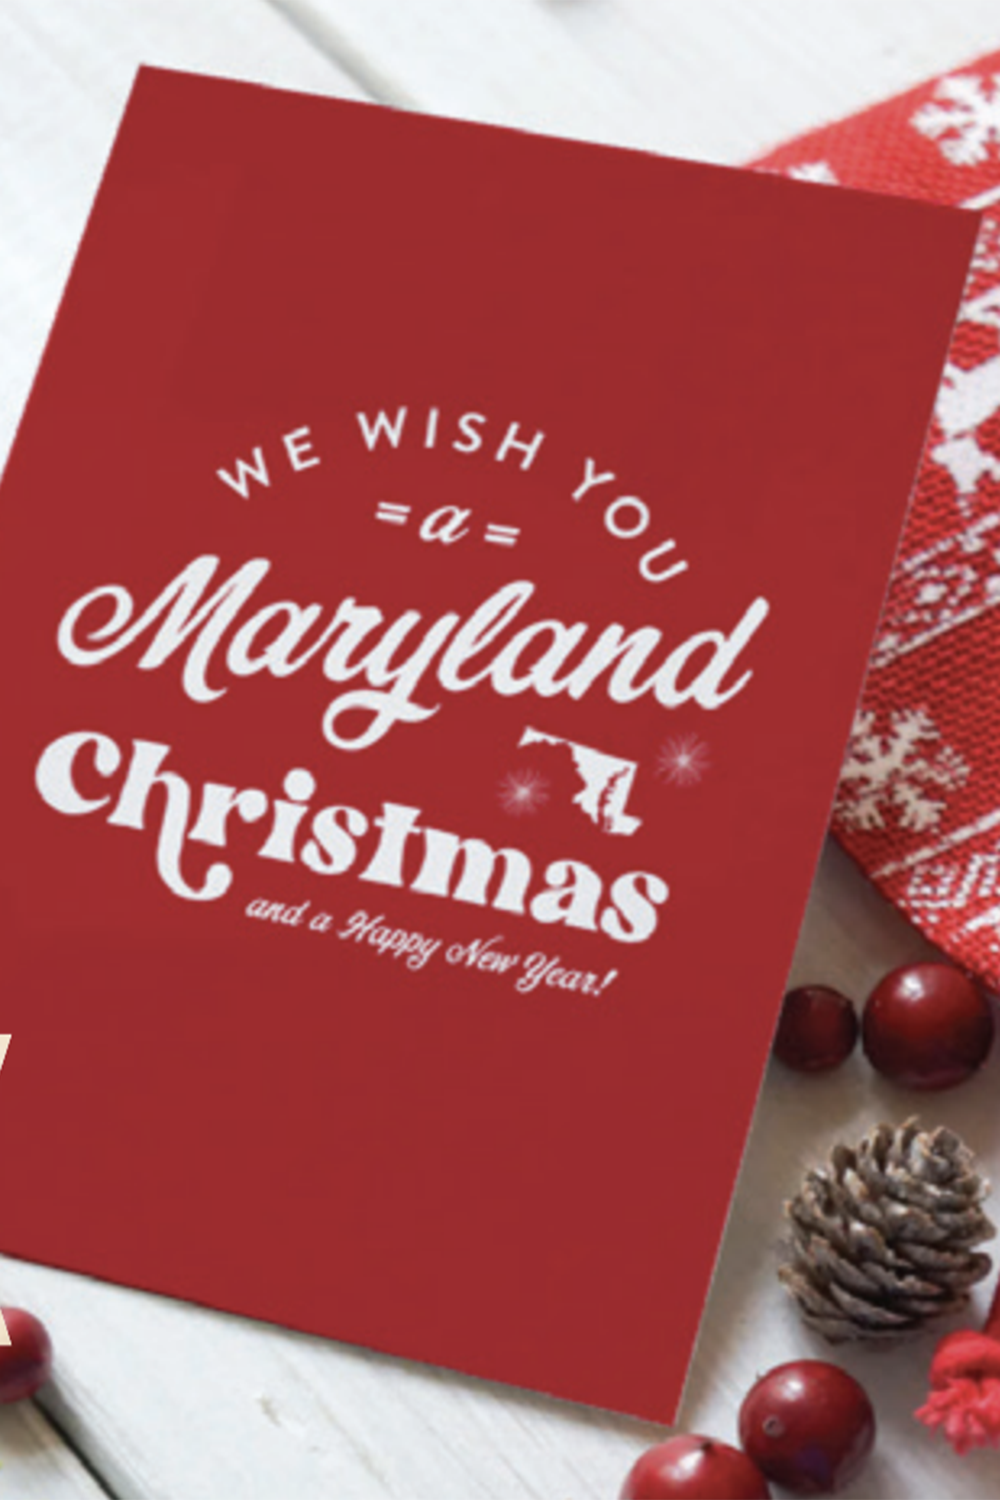 Locally Designed Holiday Card - Wish You Maryland